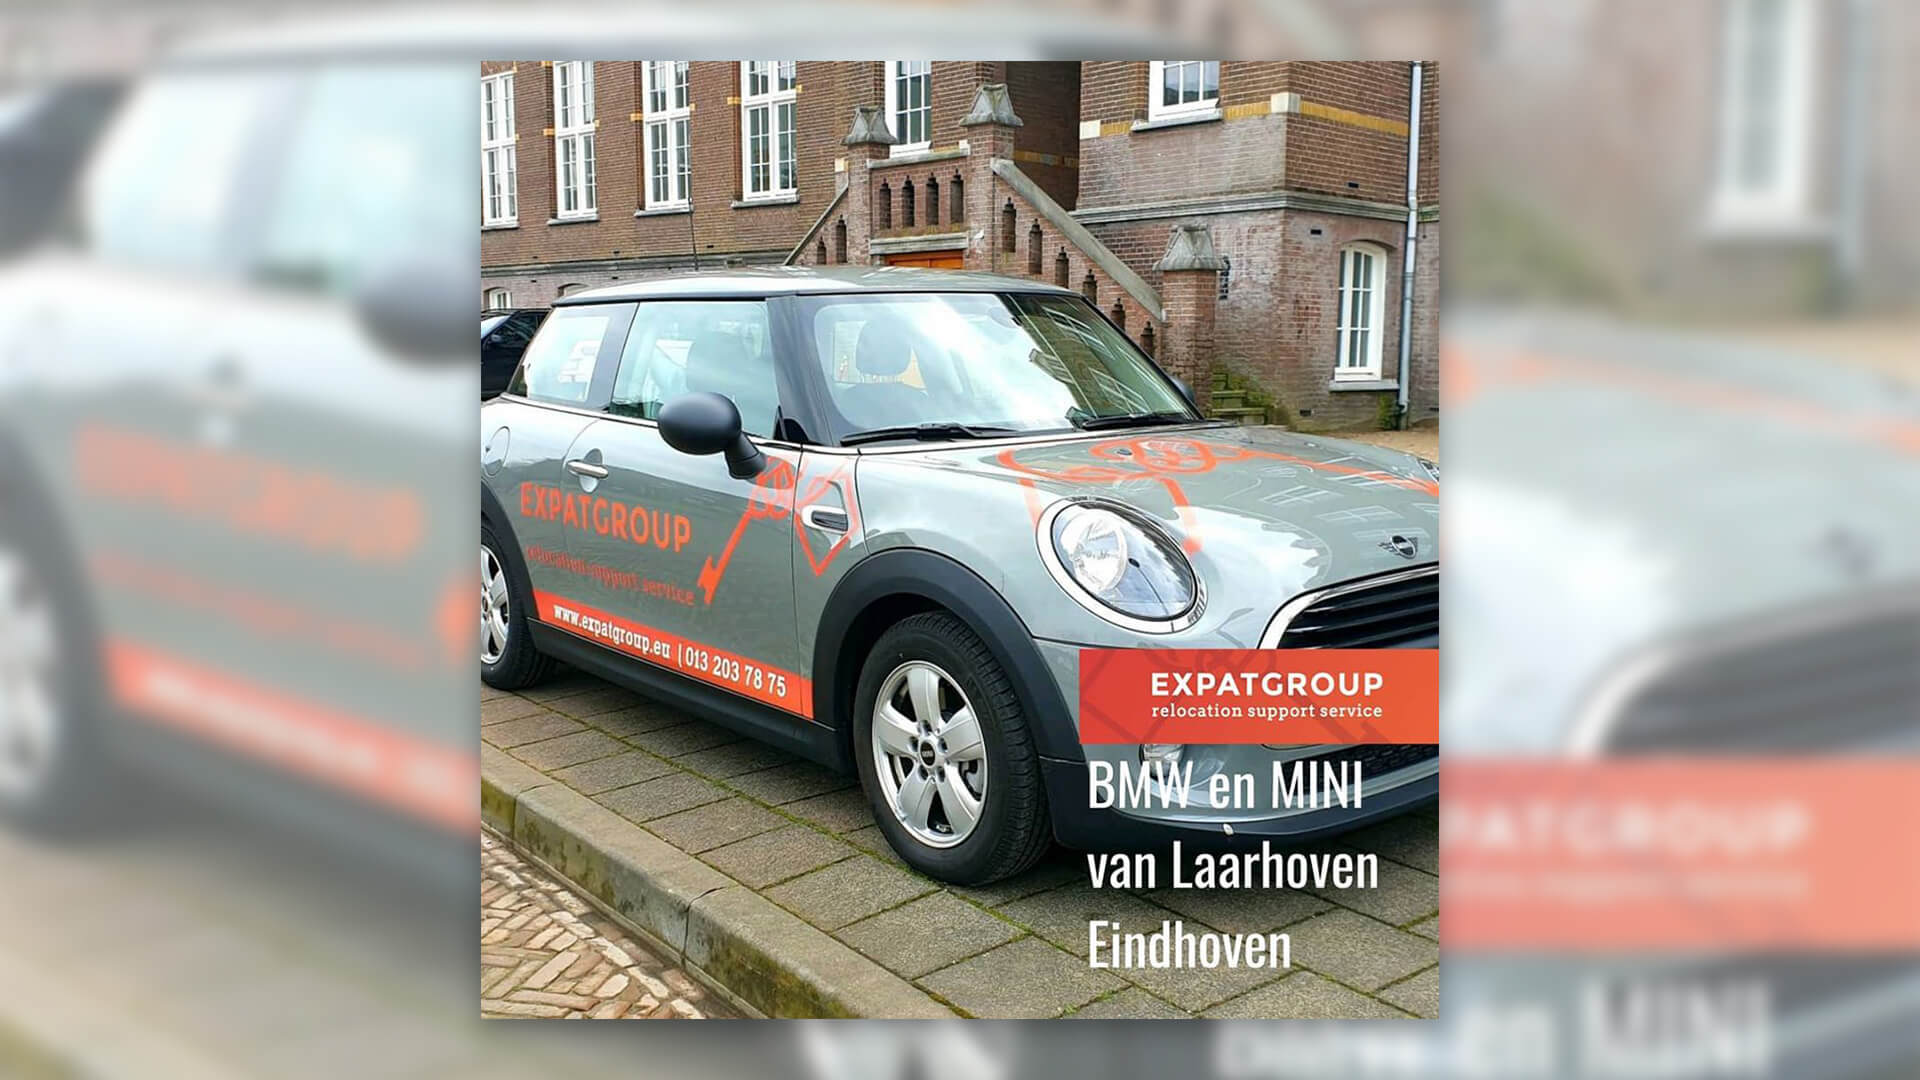 BMW van laarhoven expat group partner